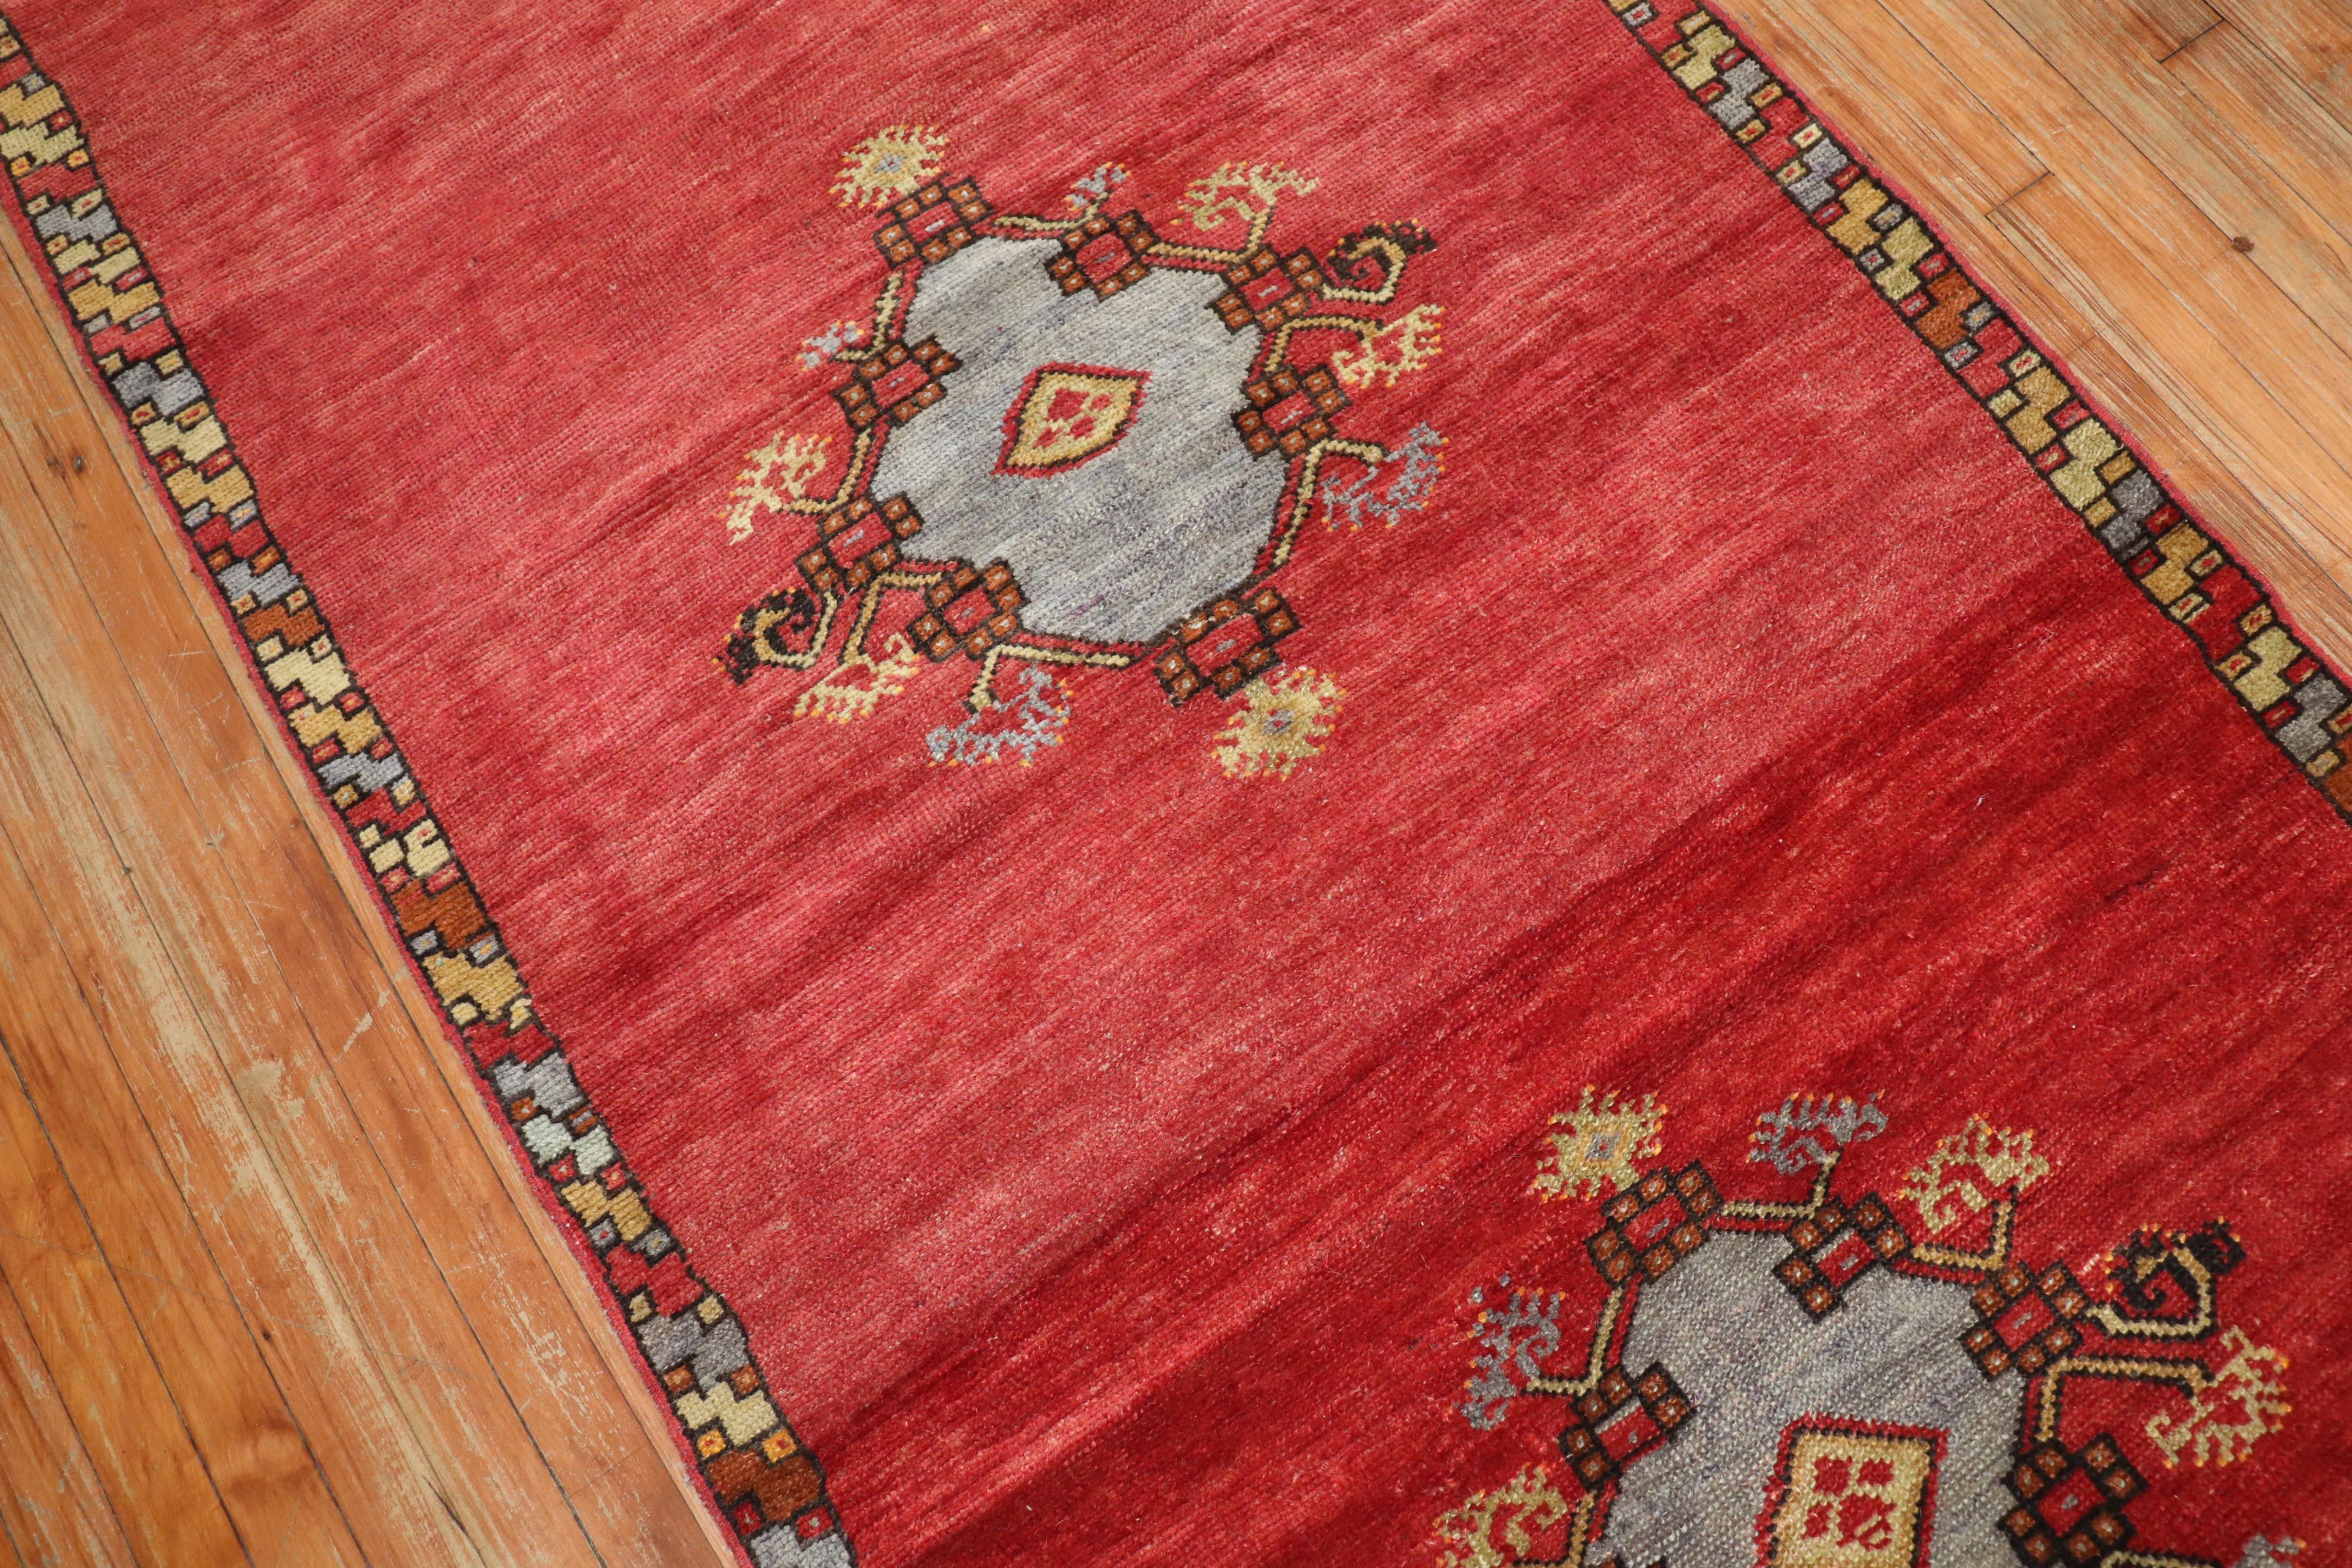 Vintage Rug 40x103 inches Red Carpet 12425 Turkish Rug Home Decor Carpet Runner Carpet Anatolian Stair Carpet